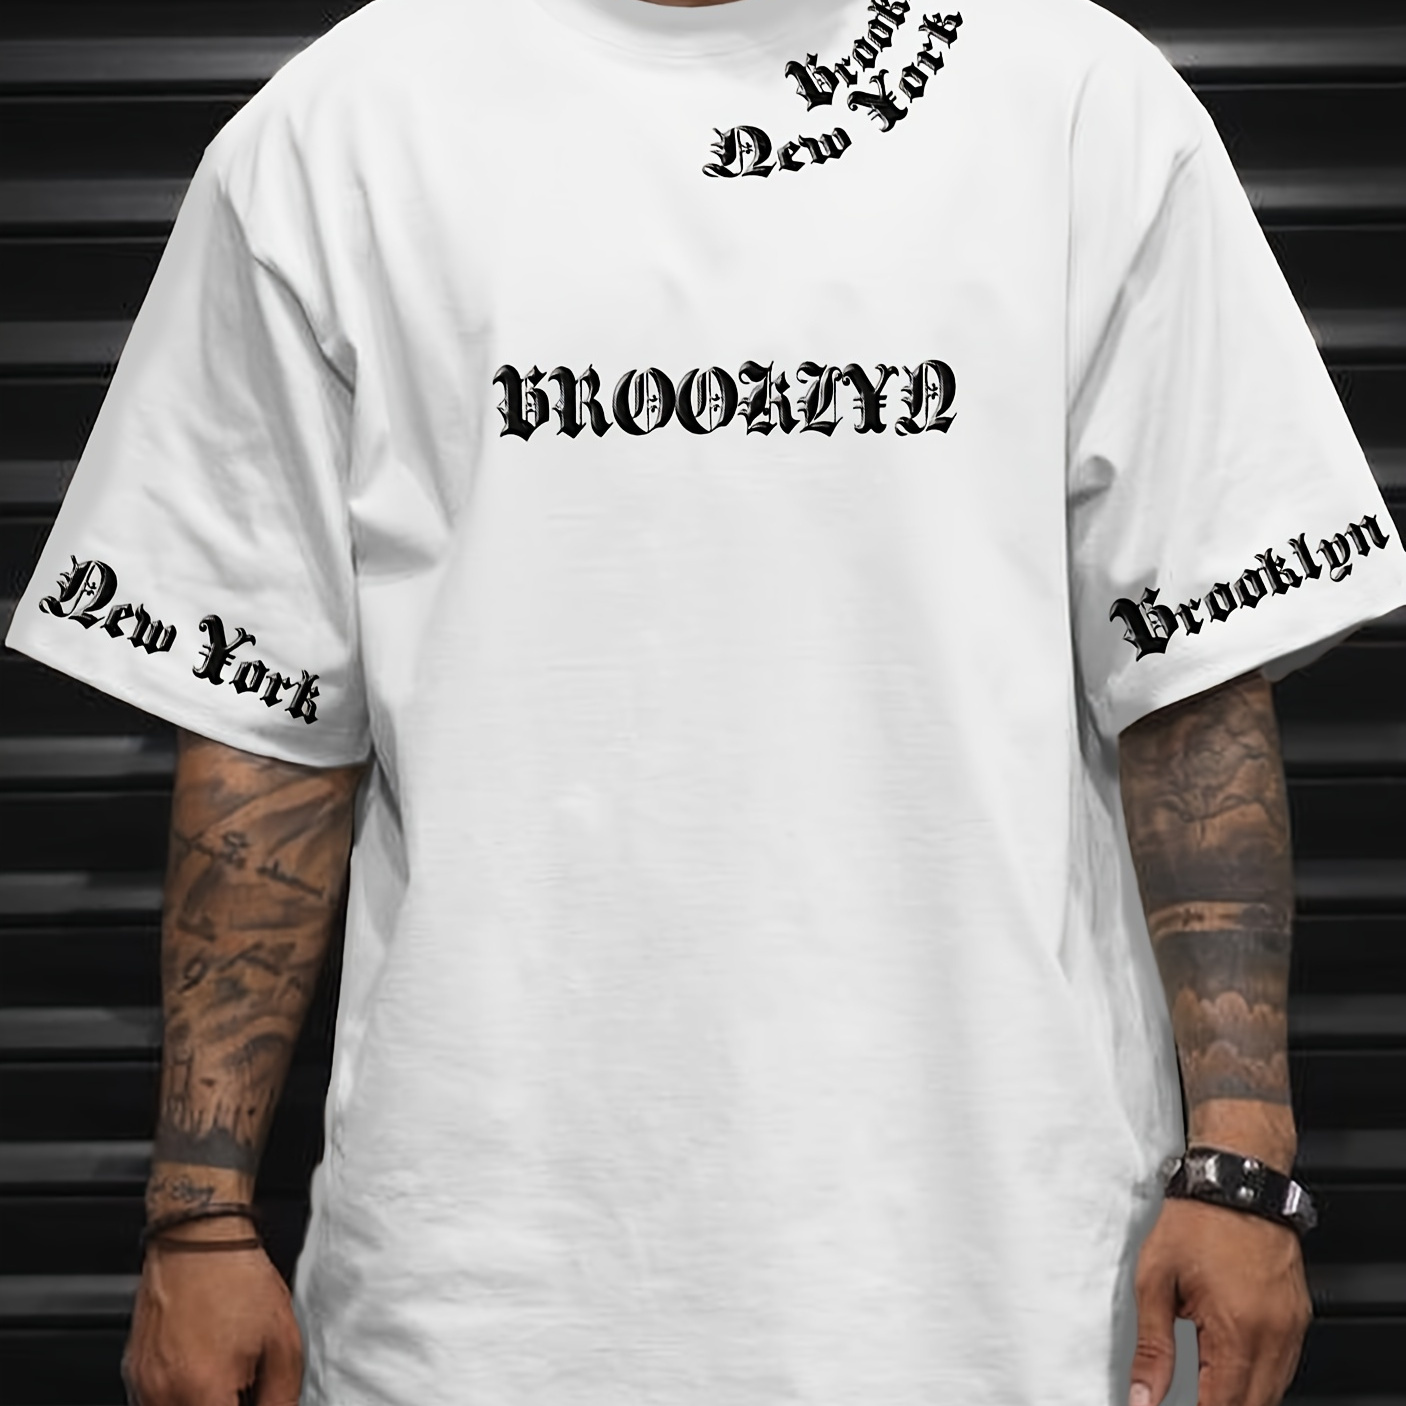 

Brooklyn Print Men's Short Sleeve T-shirt, Casual Comfy Crew Neck Tee Tops, Summer Daily Wear